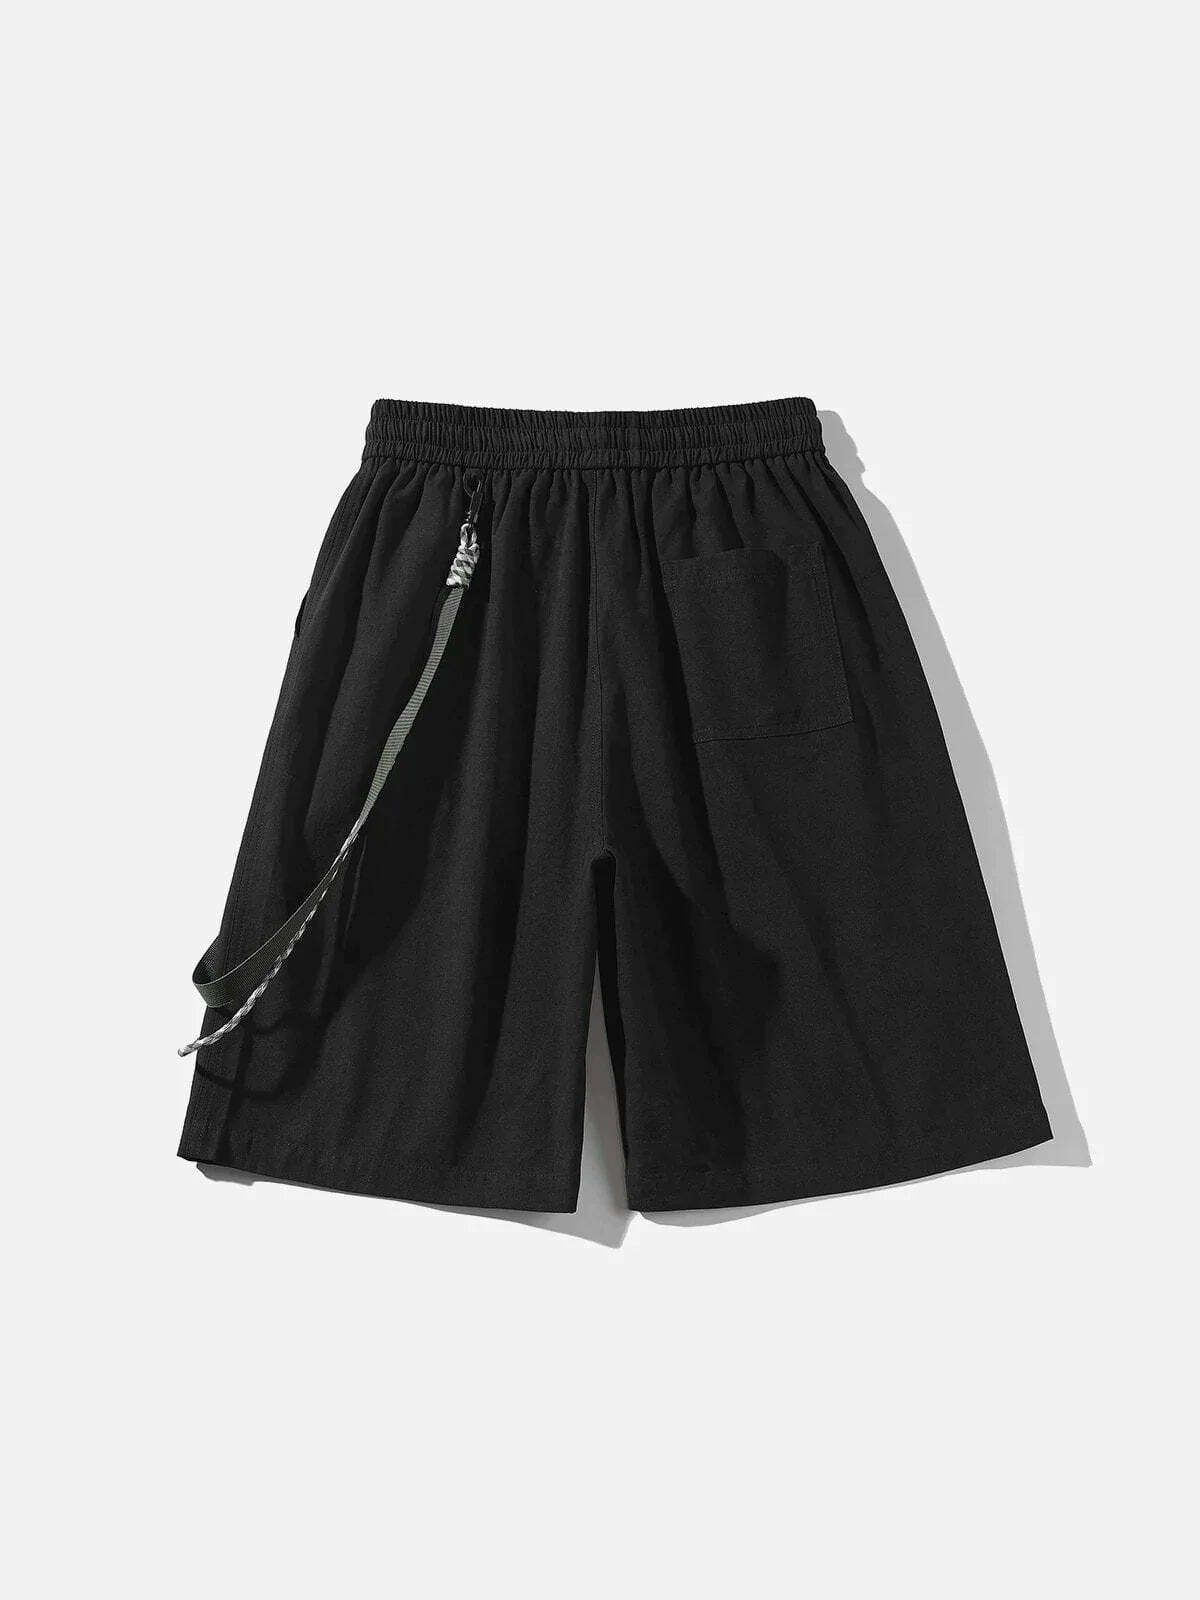 elastic waistband detachable strap shorts edgy cargo style 8429